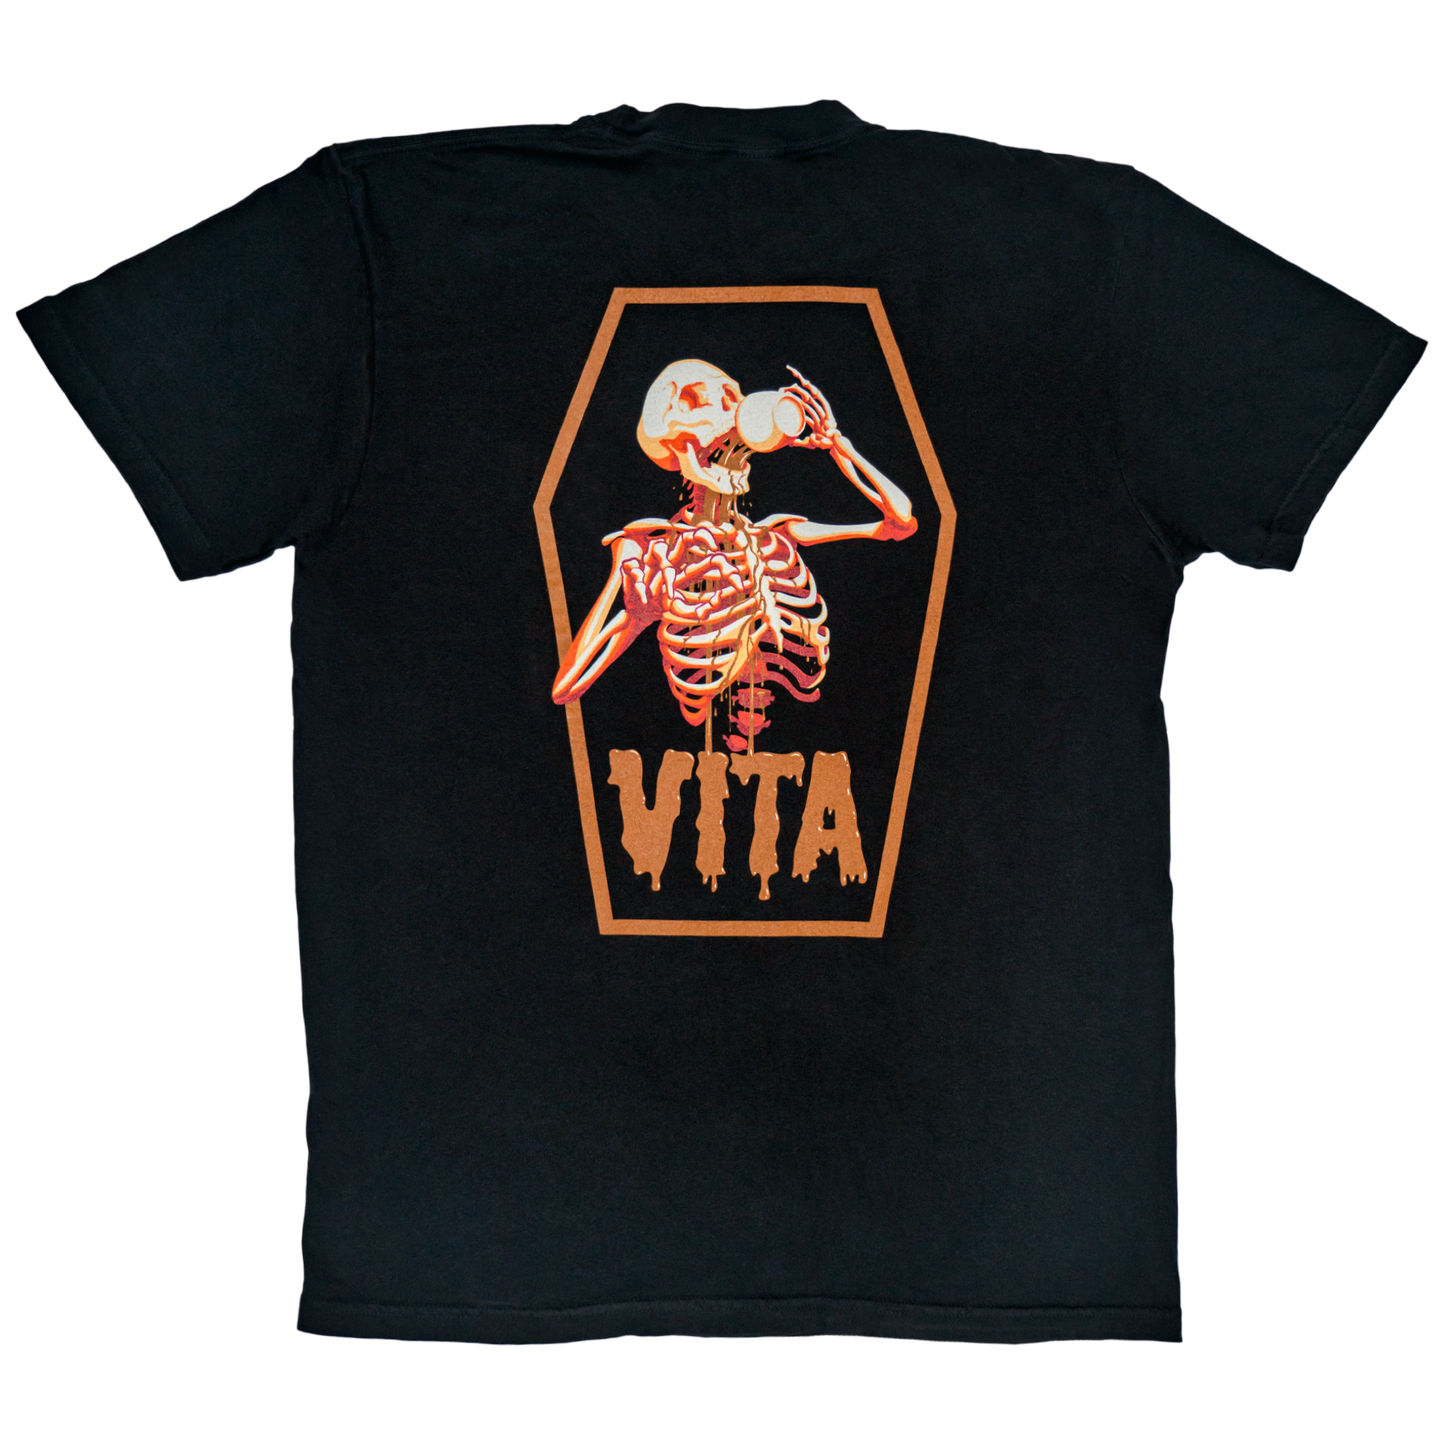 Product Image: Back of shirt, with skeleton design. 